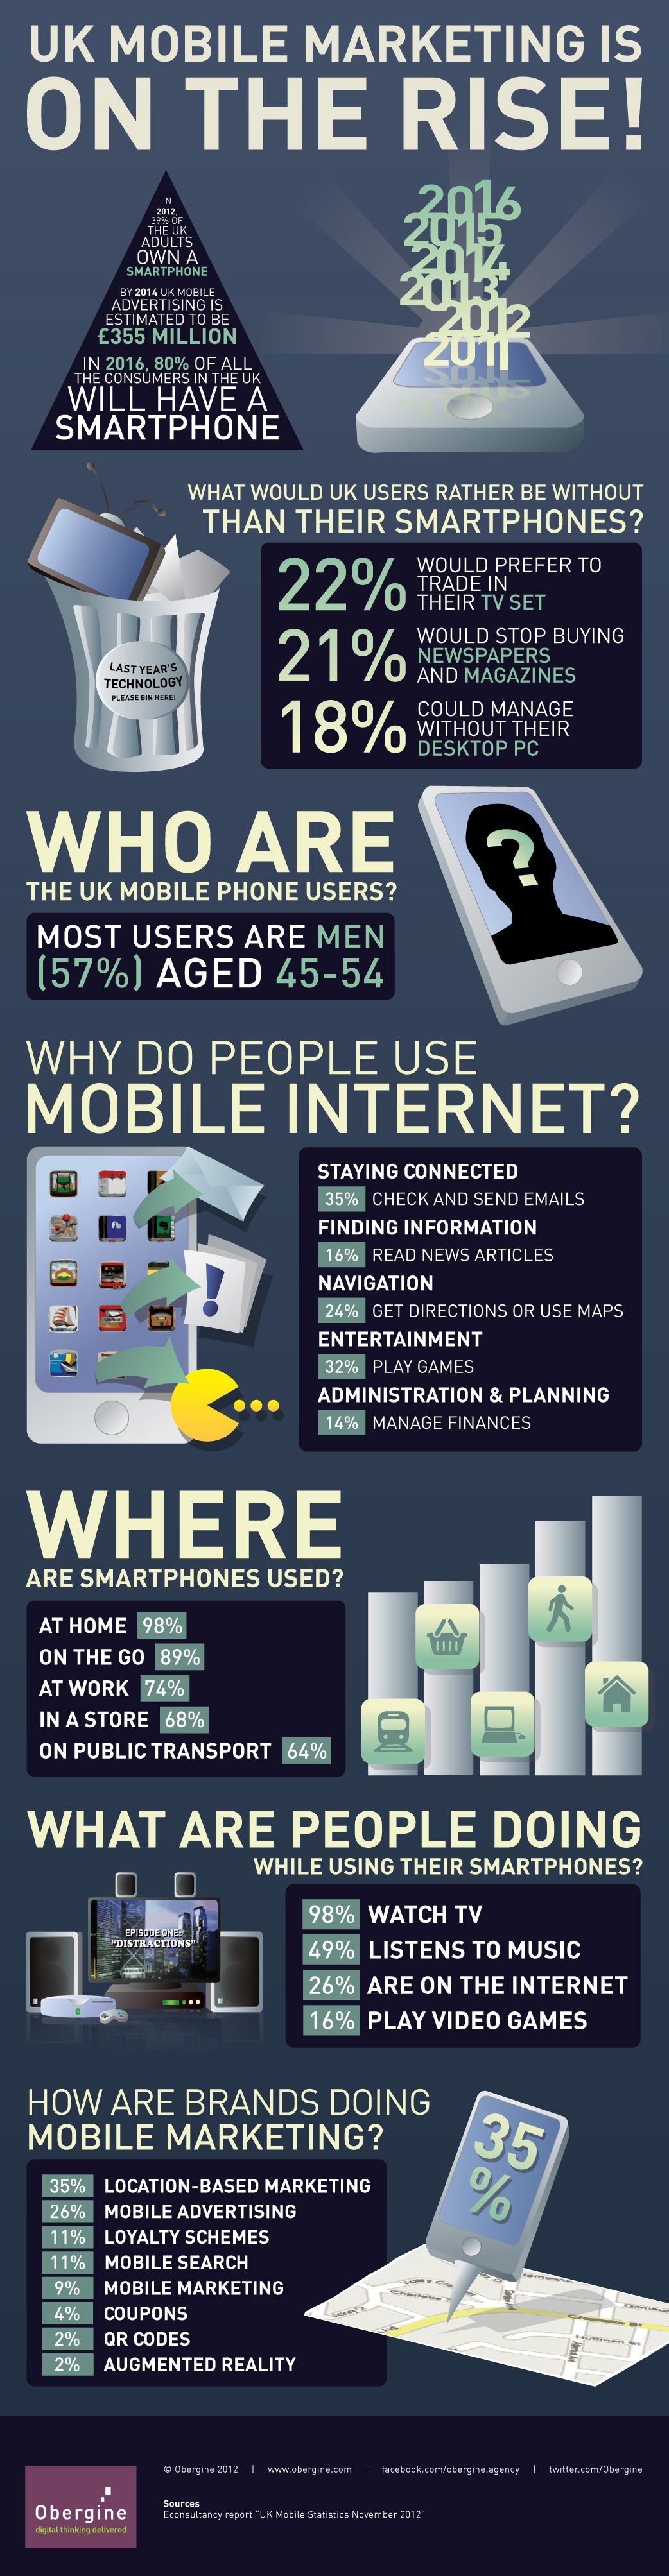 UK Mobile Marketing infographic